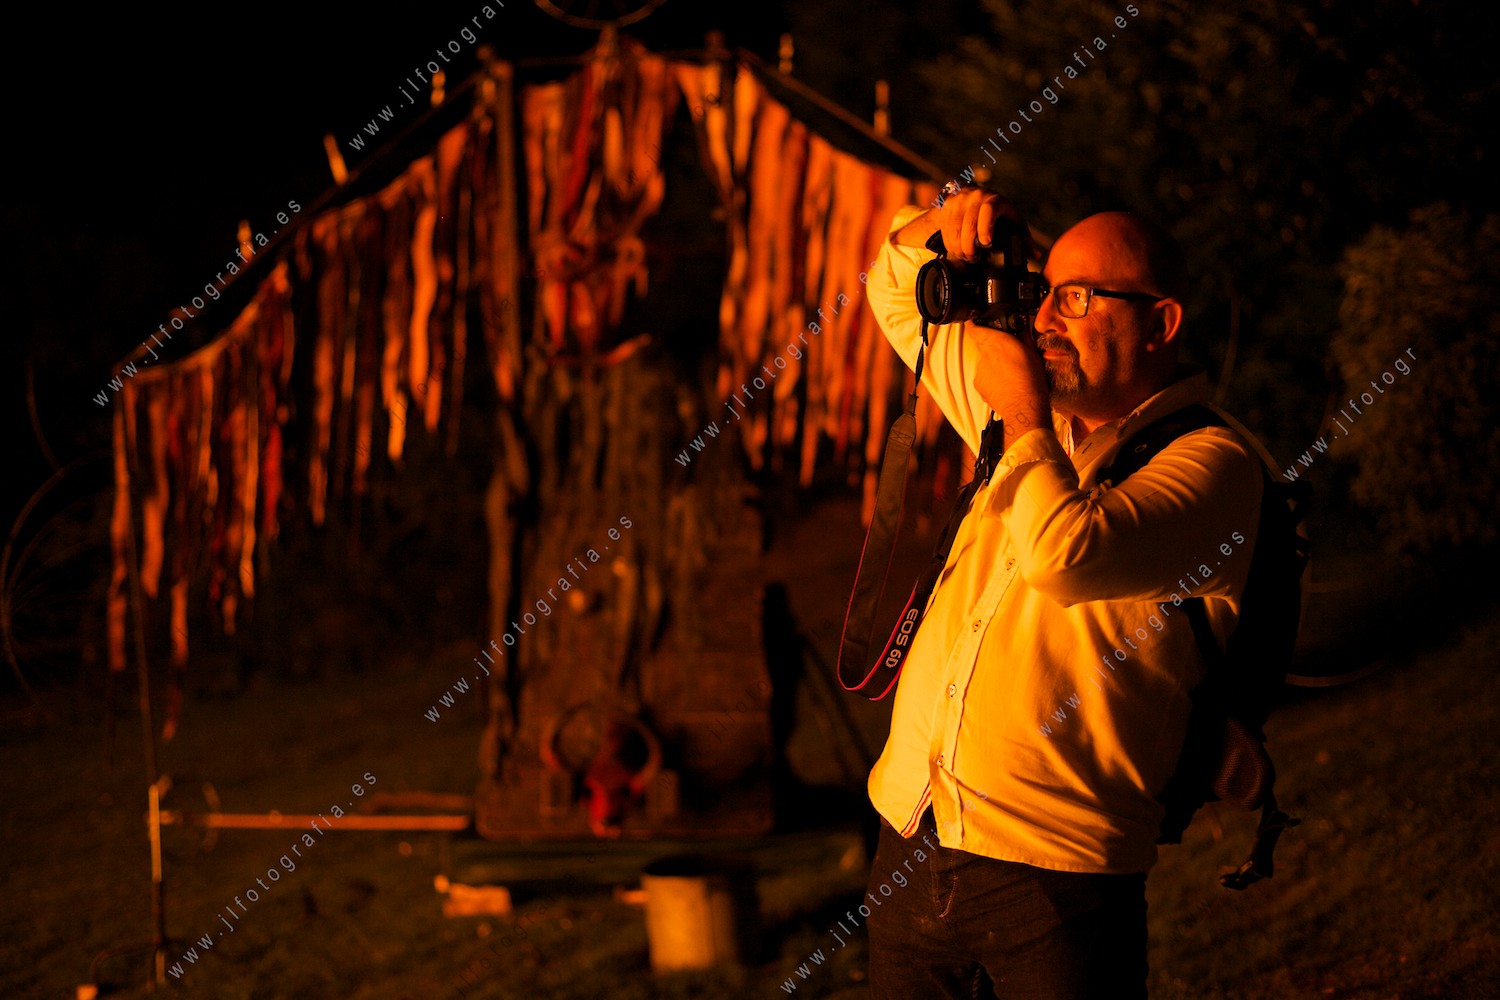 Un fotógrafo retratando junto a la hoguera